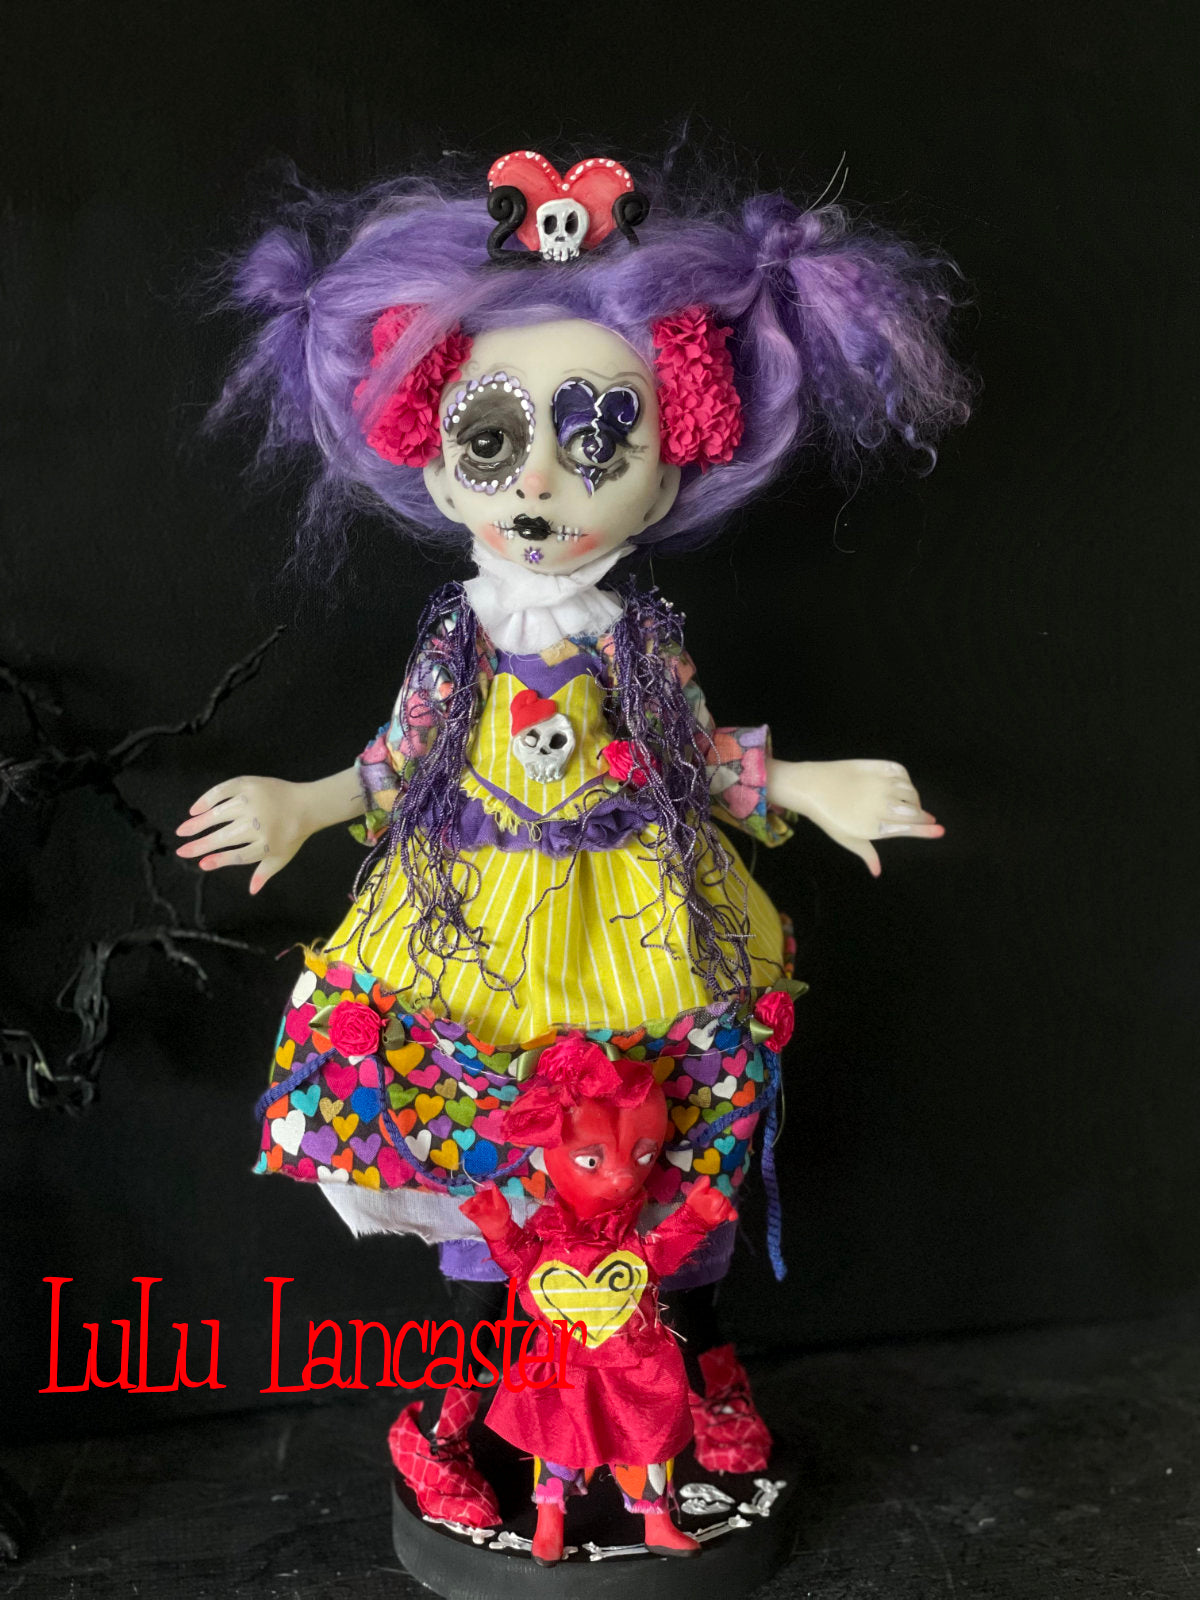 Lamora Valentine Muerta death doll  Original LuLu Lancaster Art Doll